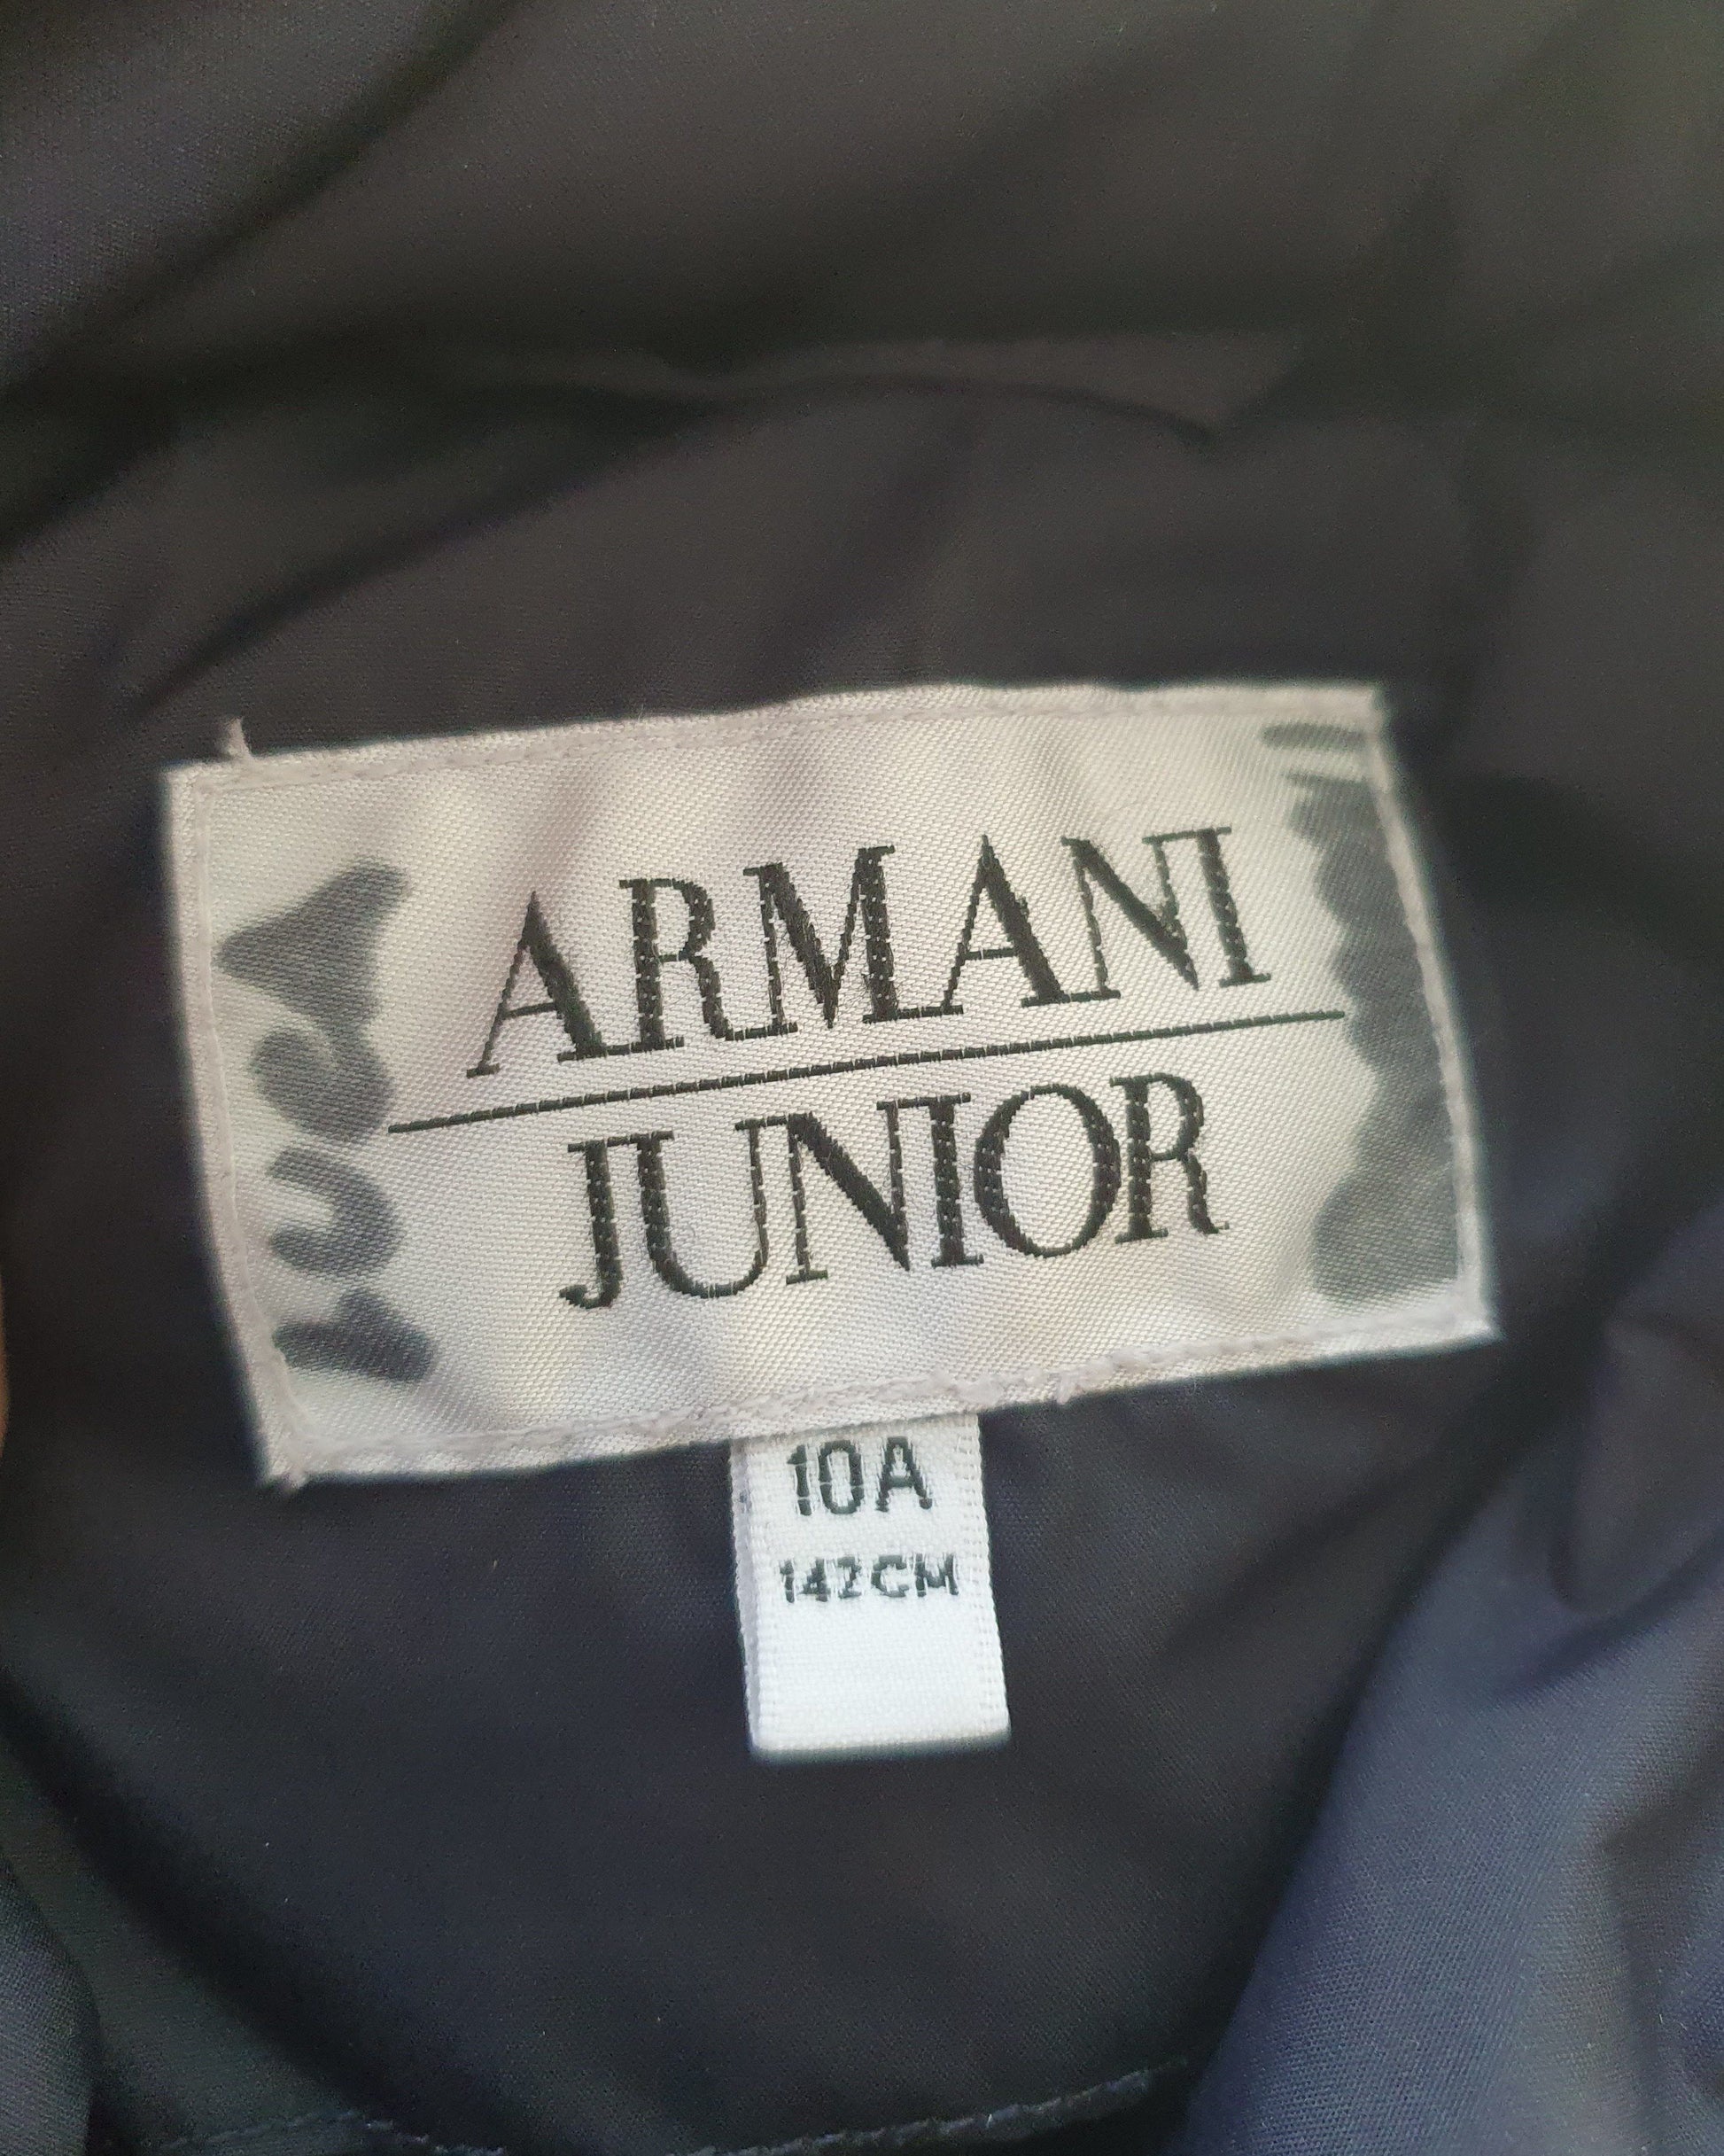 Armani Junior Very Good, 10A/142cm Armani Junior  (6643344375993)